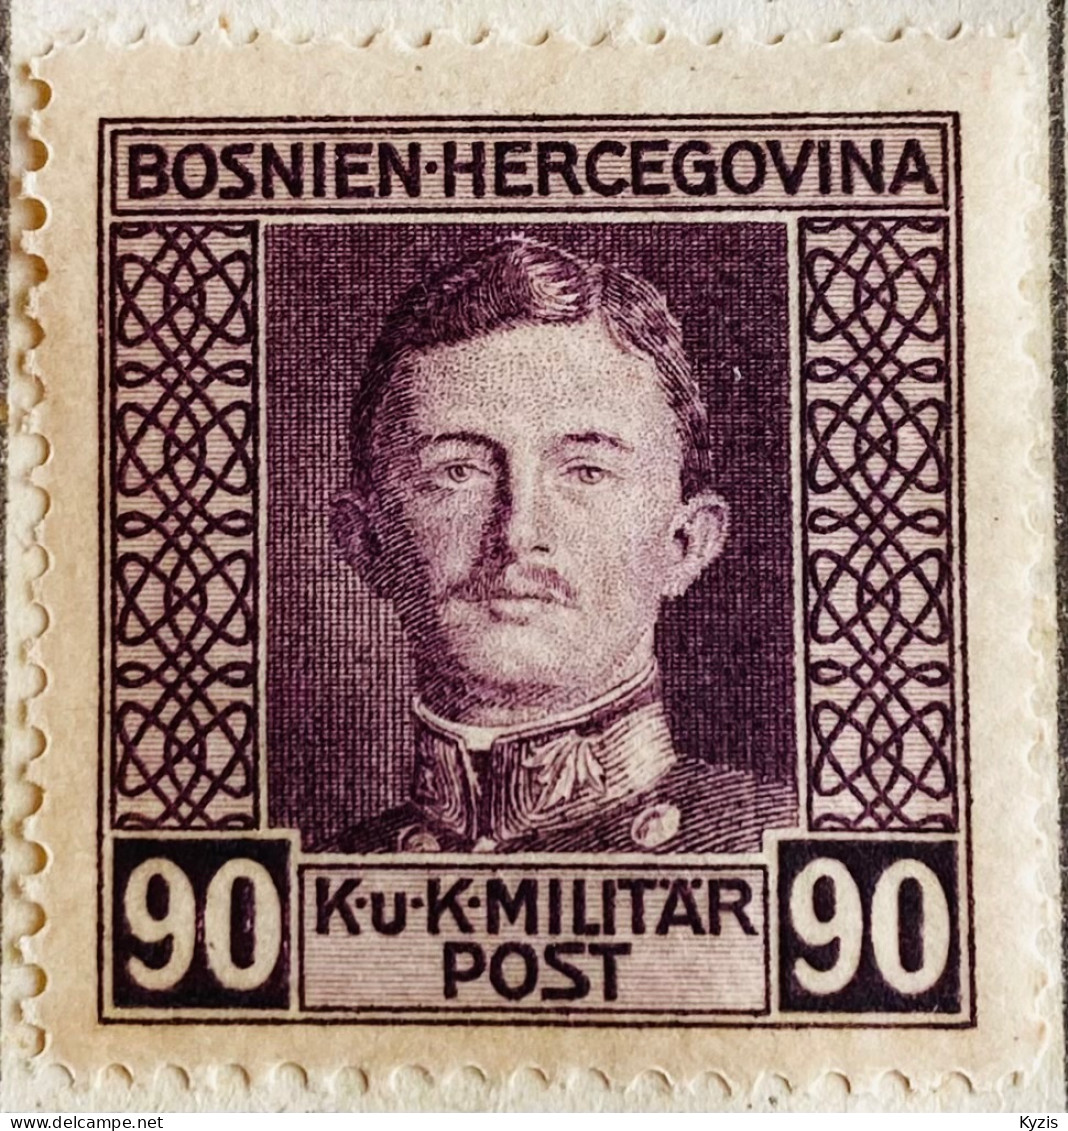 BOSNIE-HERZÉGOVINE - Charles Ier 1917 - MICHEL 137 A, NEUF AVEC GOMME - Bosnia Herzegovina